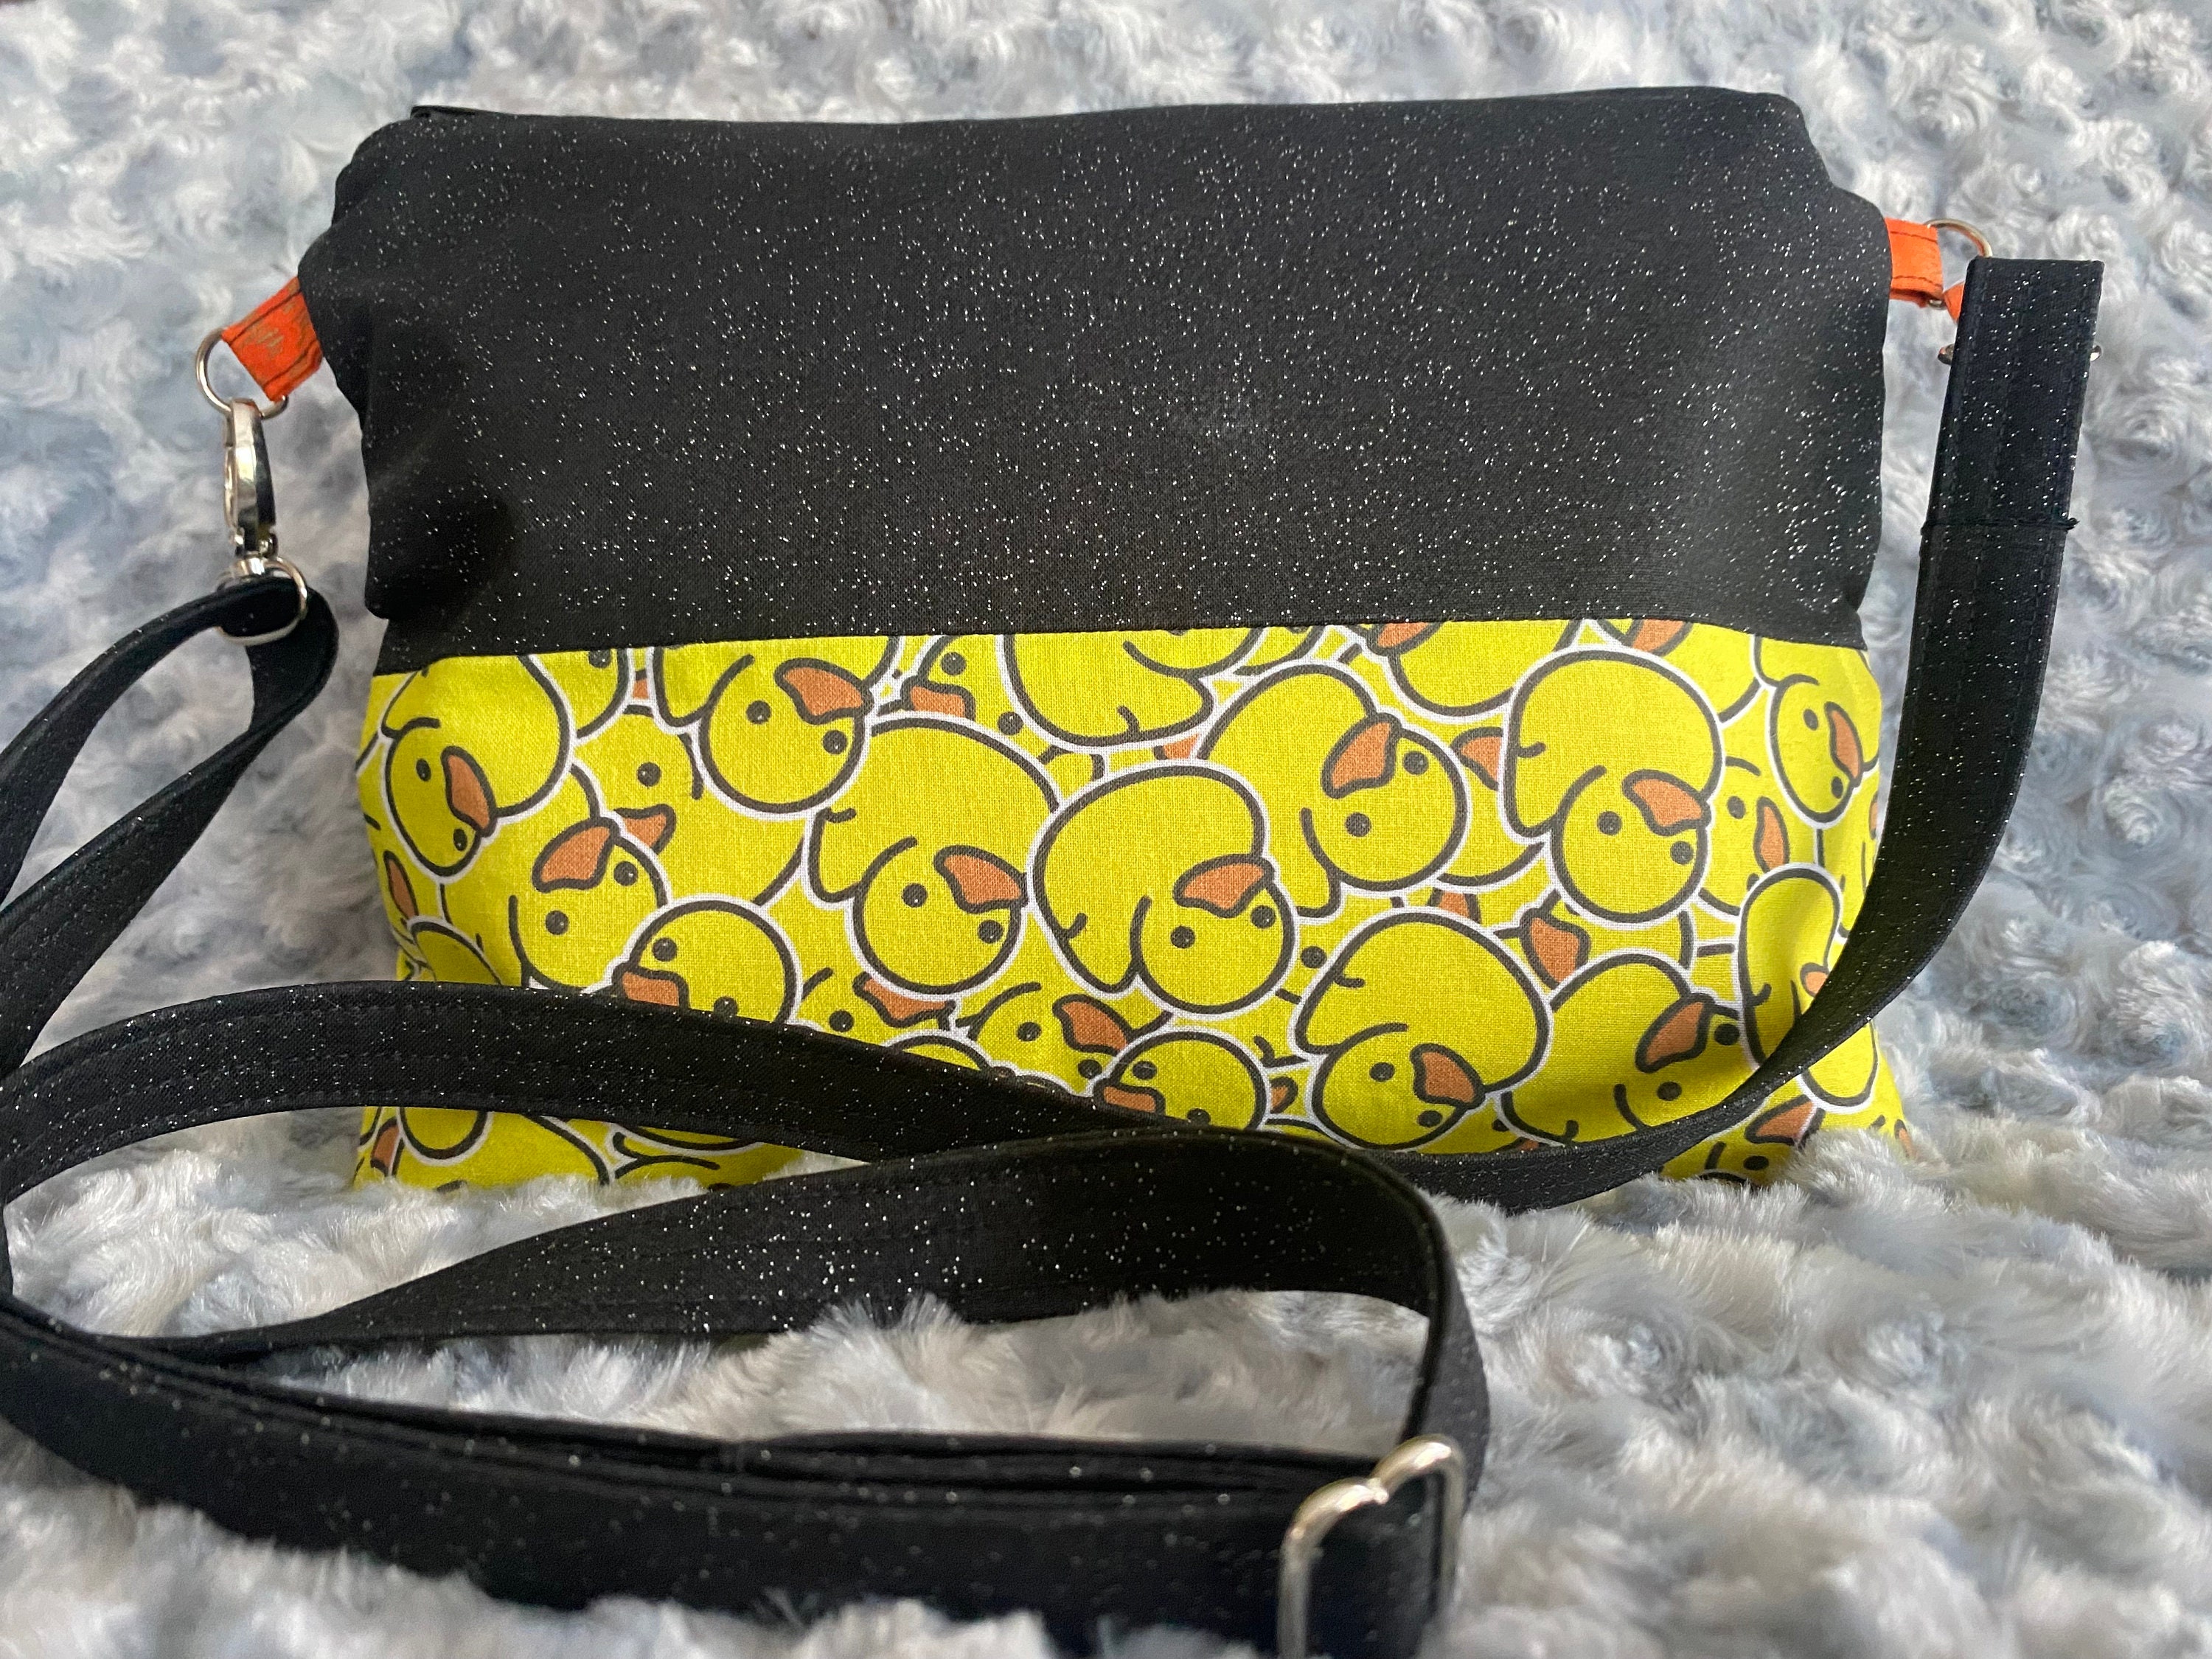 Duck Bag - Luxury Crossbody Bags - Bags, Men M45990